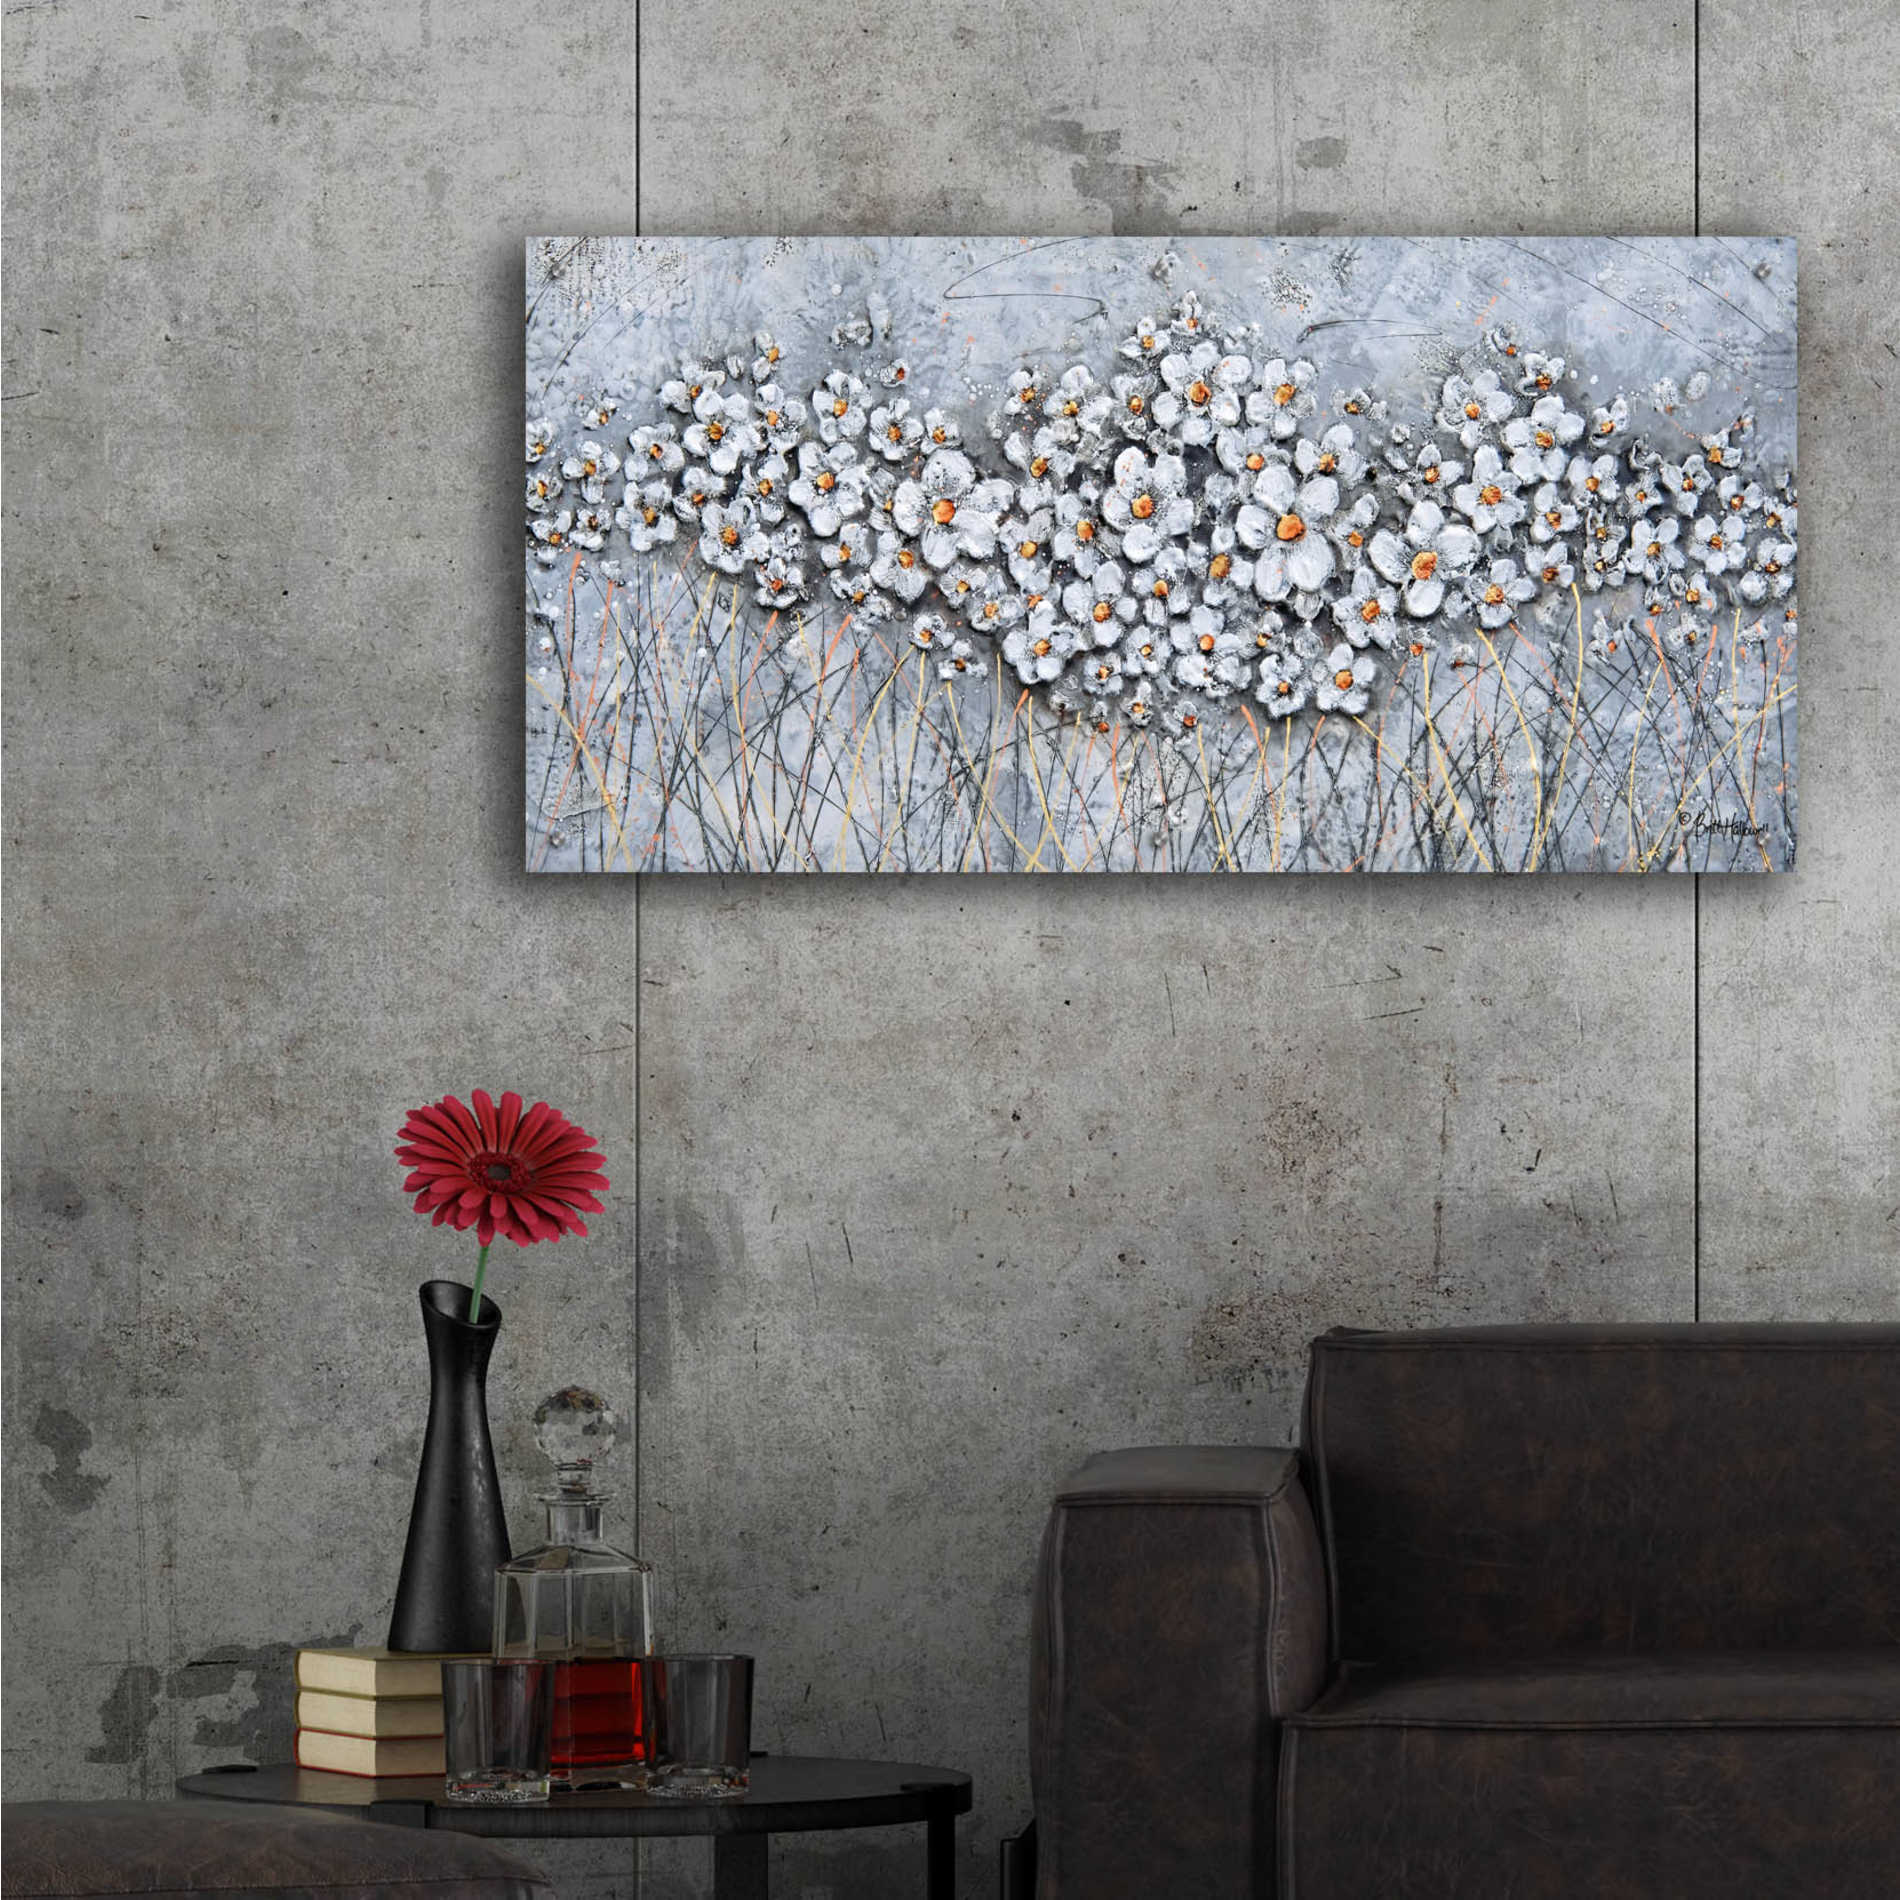 Epic Art 'Fields of Pearls' by Britt Hallowell, Acrylic Glass Wall Art,48x24